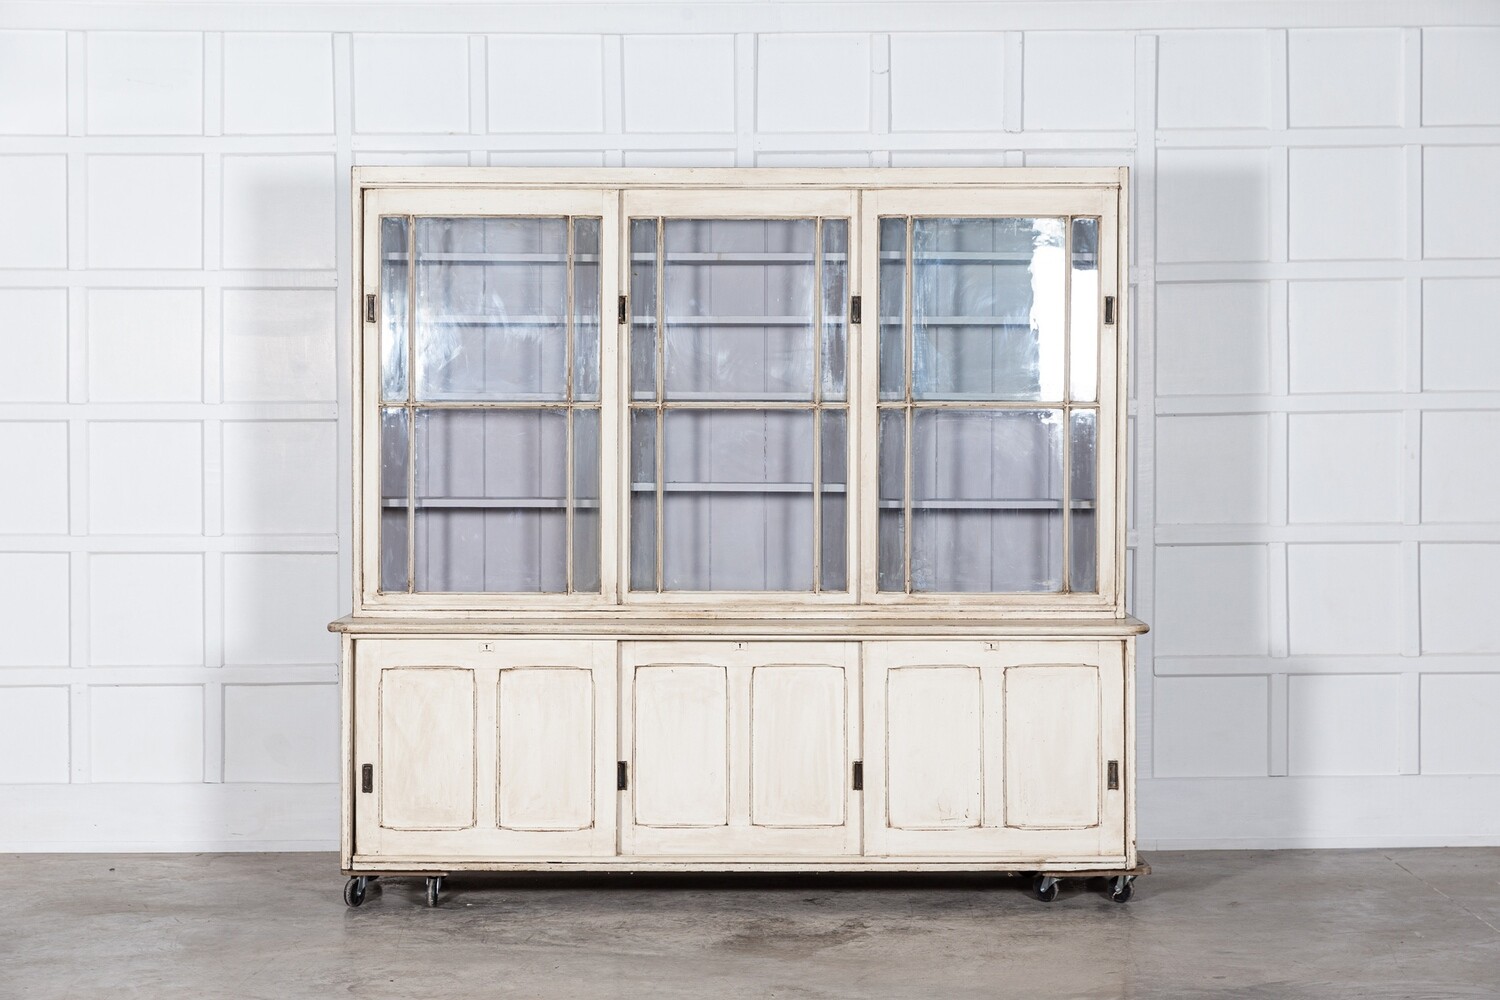 19thC Large English Pine Glazed Butlers Pantry Cabinet